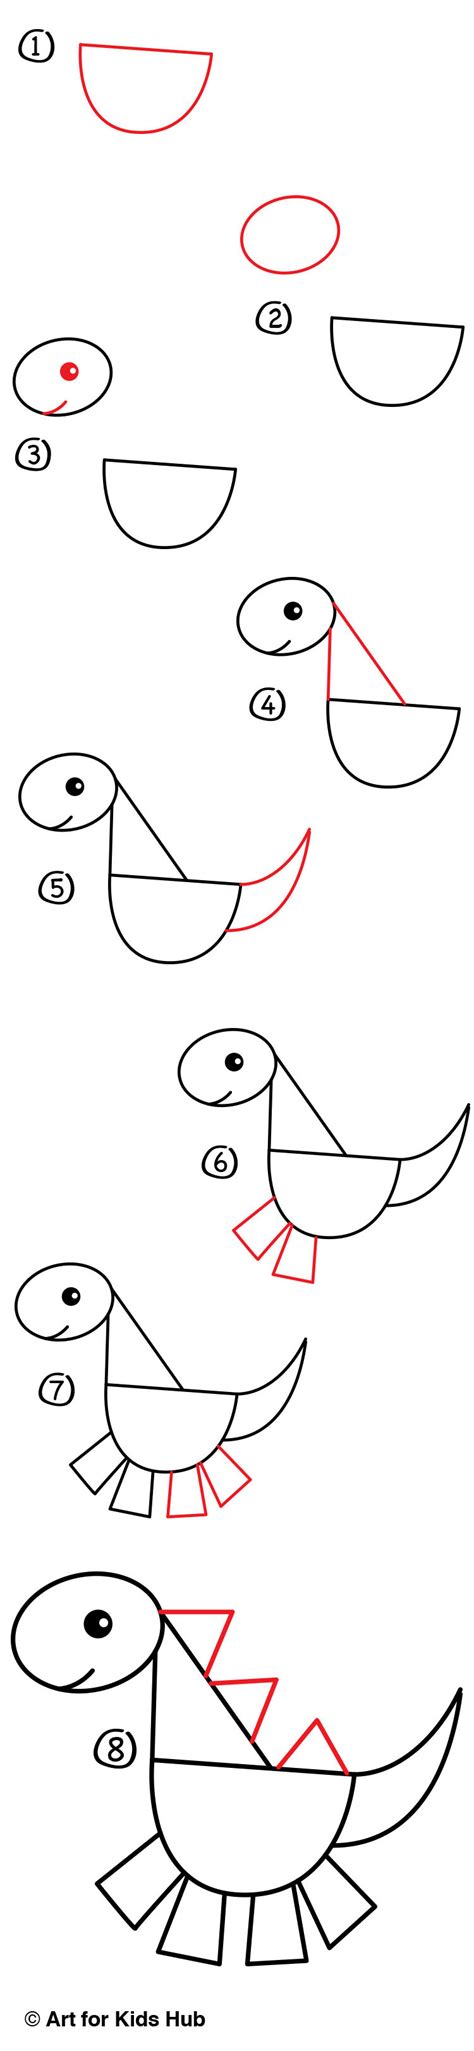 Dinosaur Easy Drawing For Kids